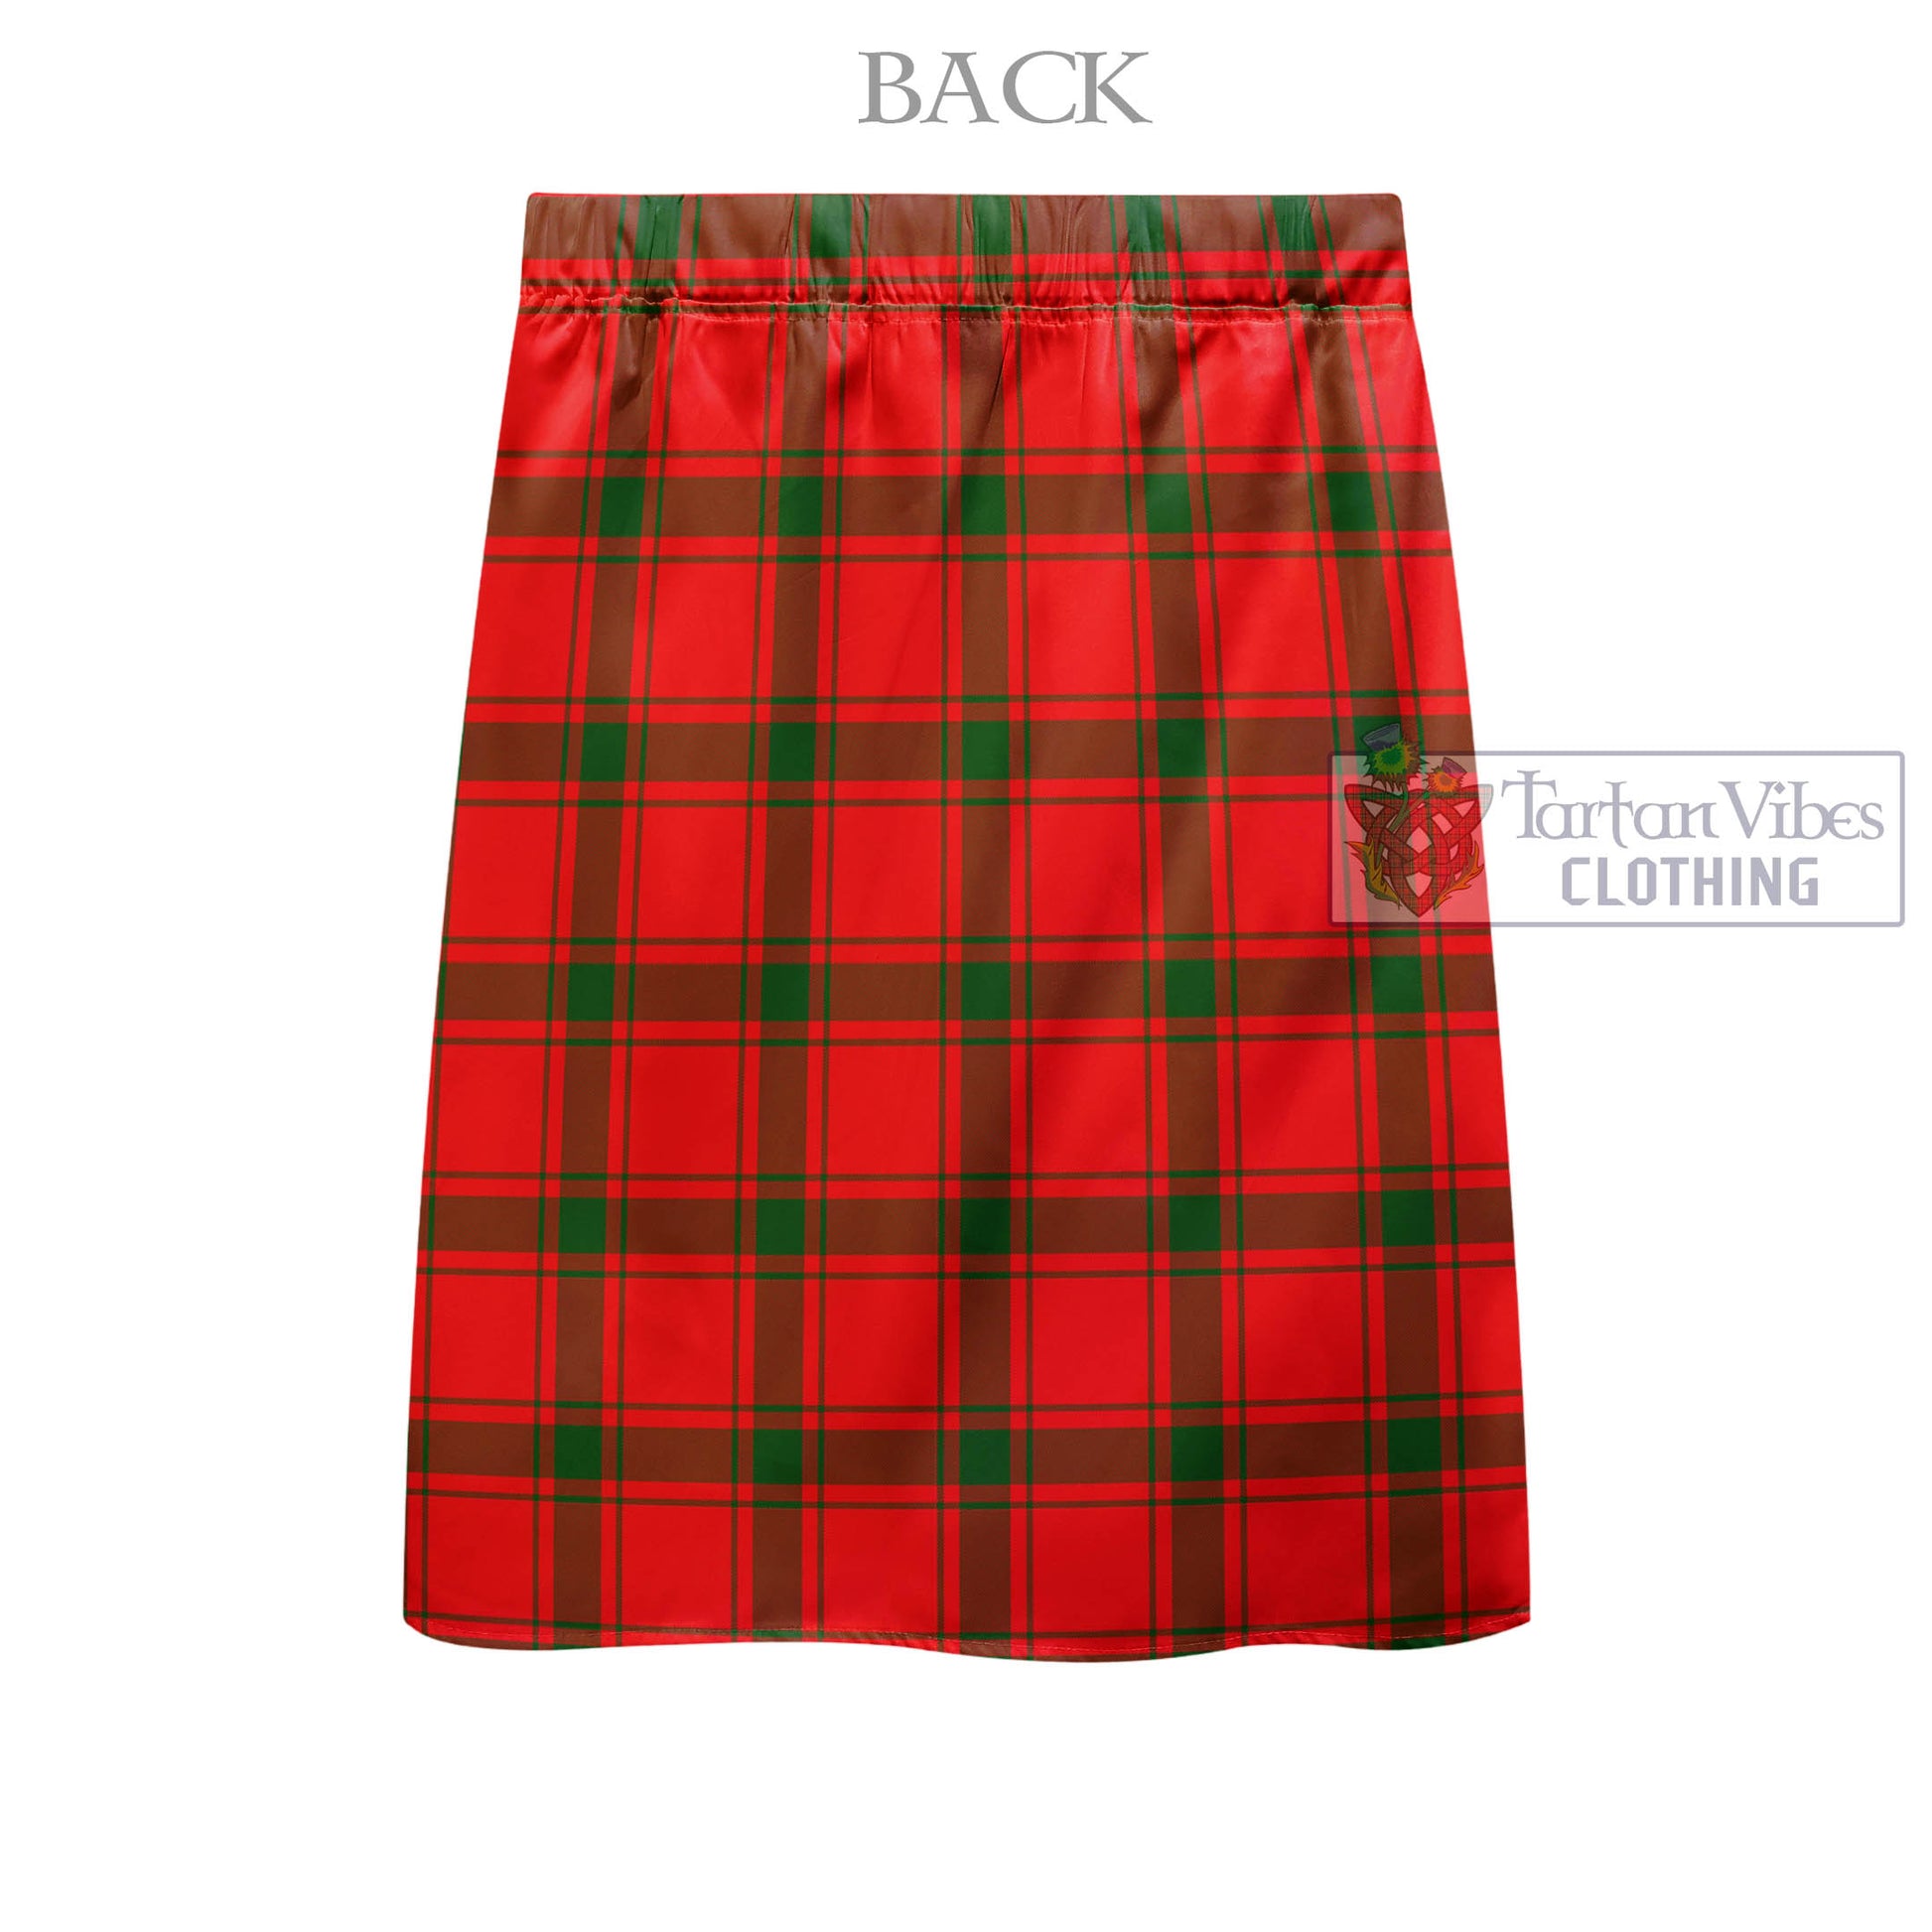 Tartan Vibes Clothing Darroch Tartan Men's Pleated Skirt - Fashion Casual Retro Scottish Style